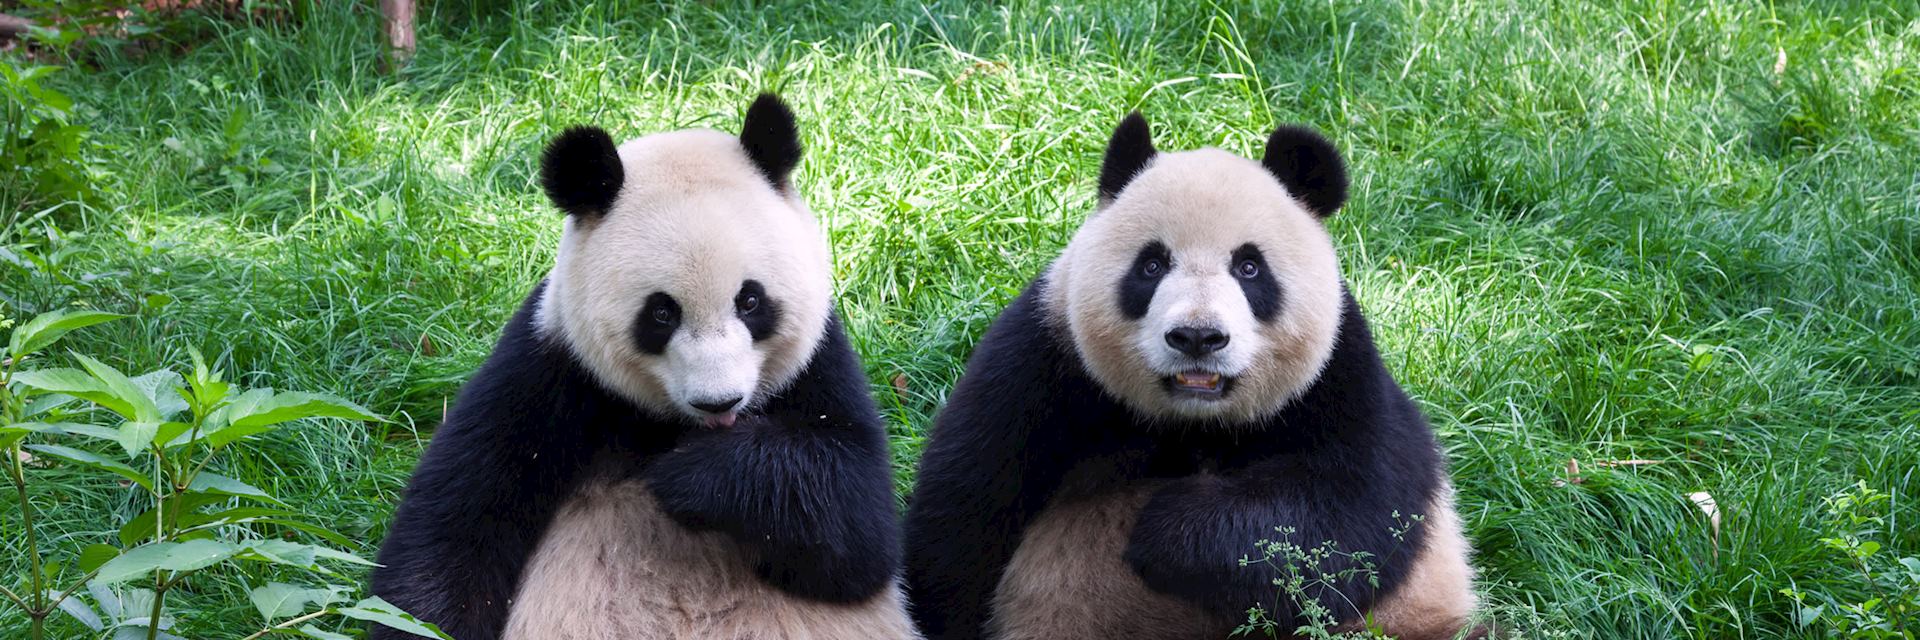 Panda's in Chengdu